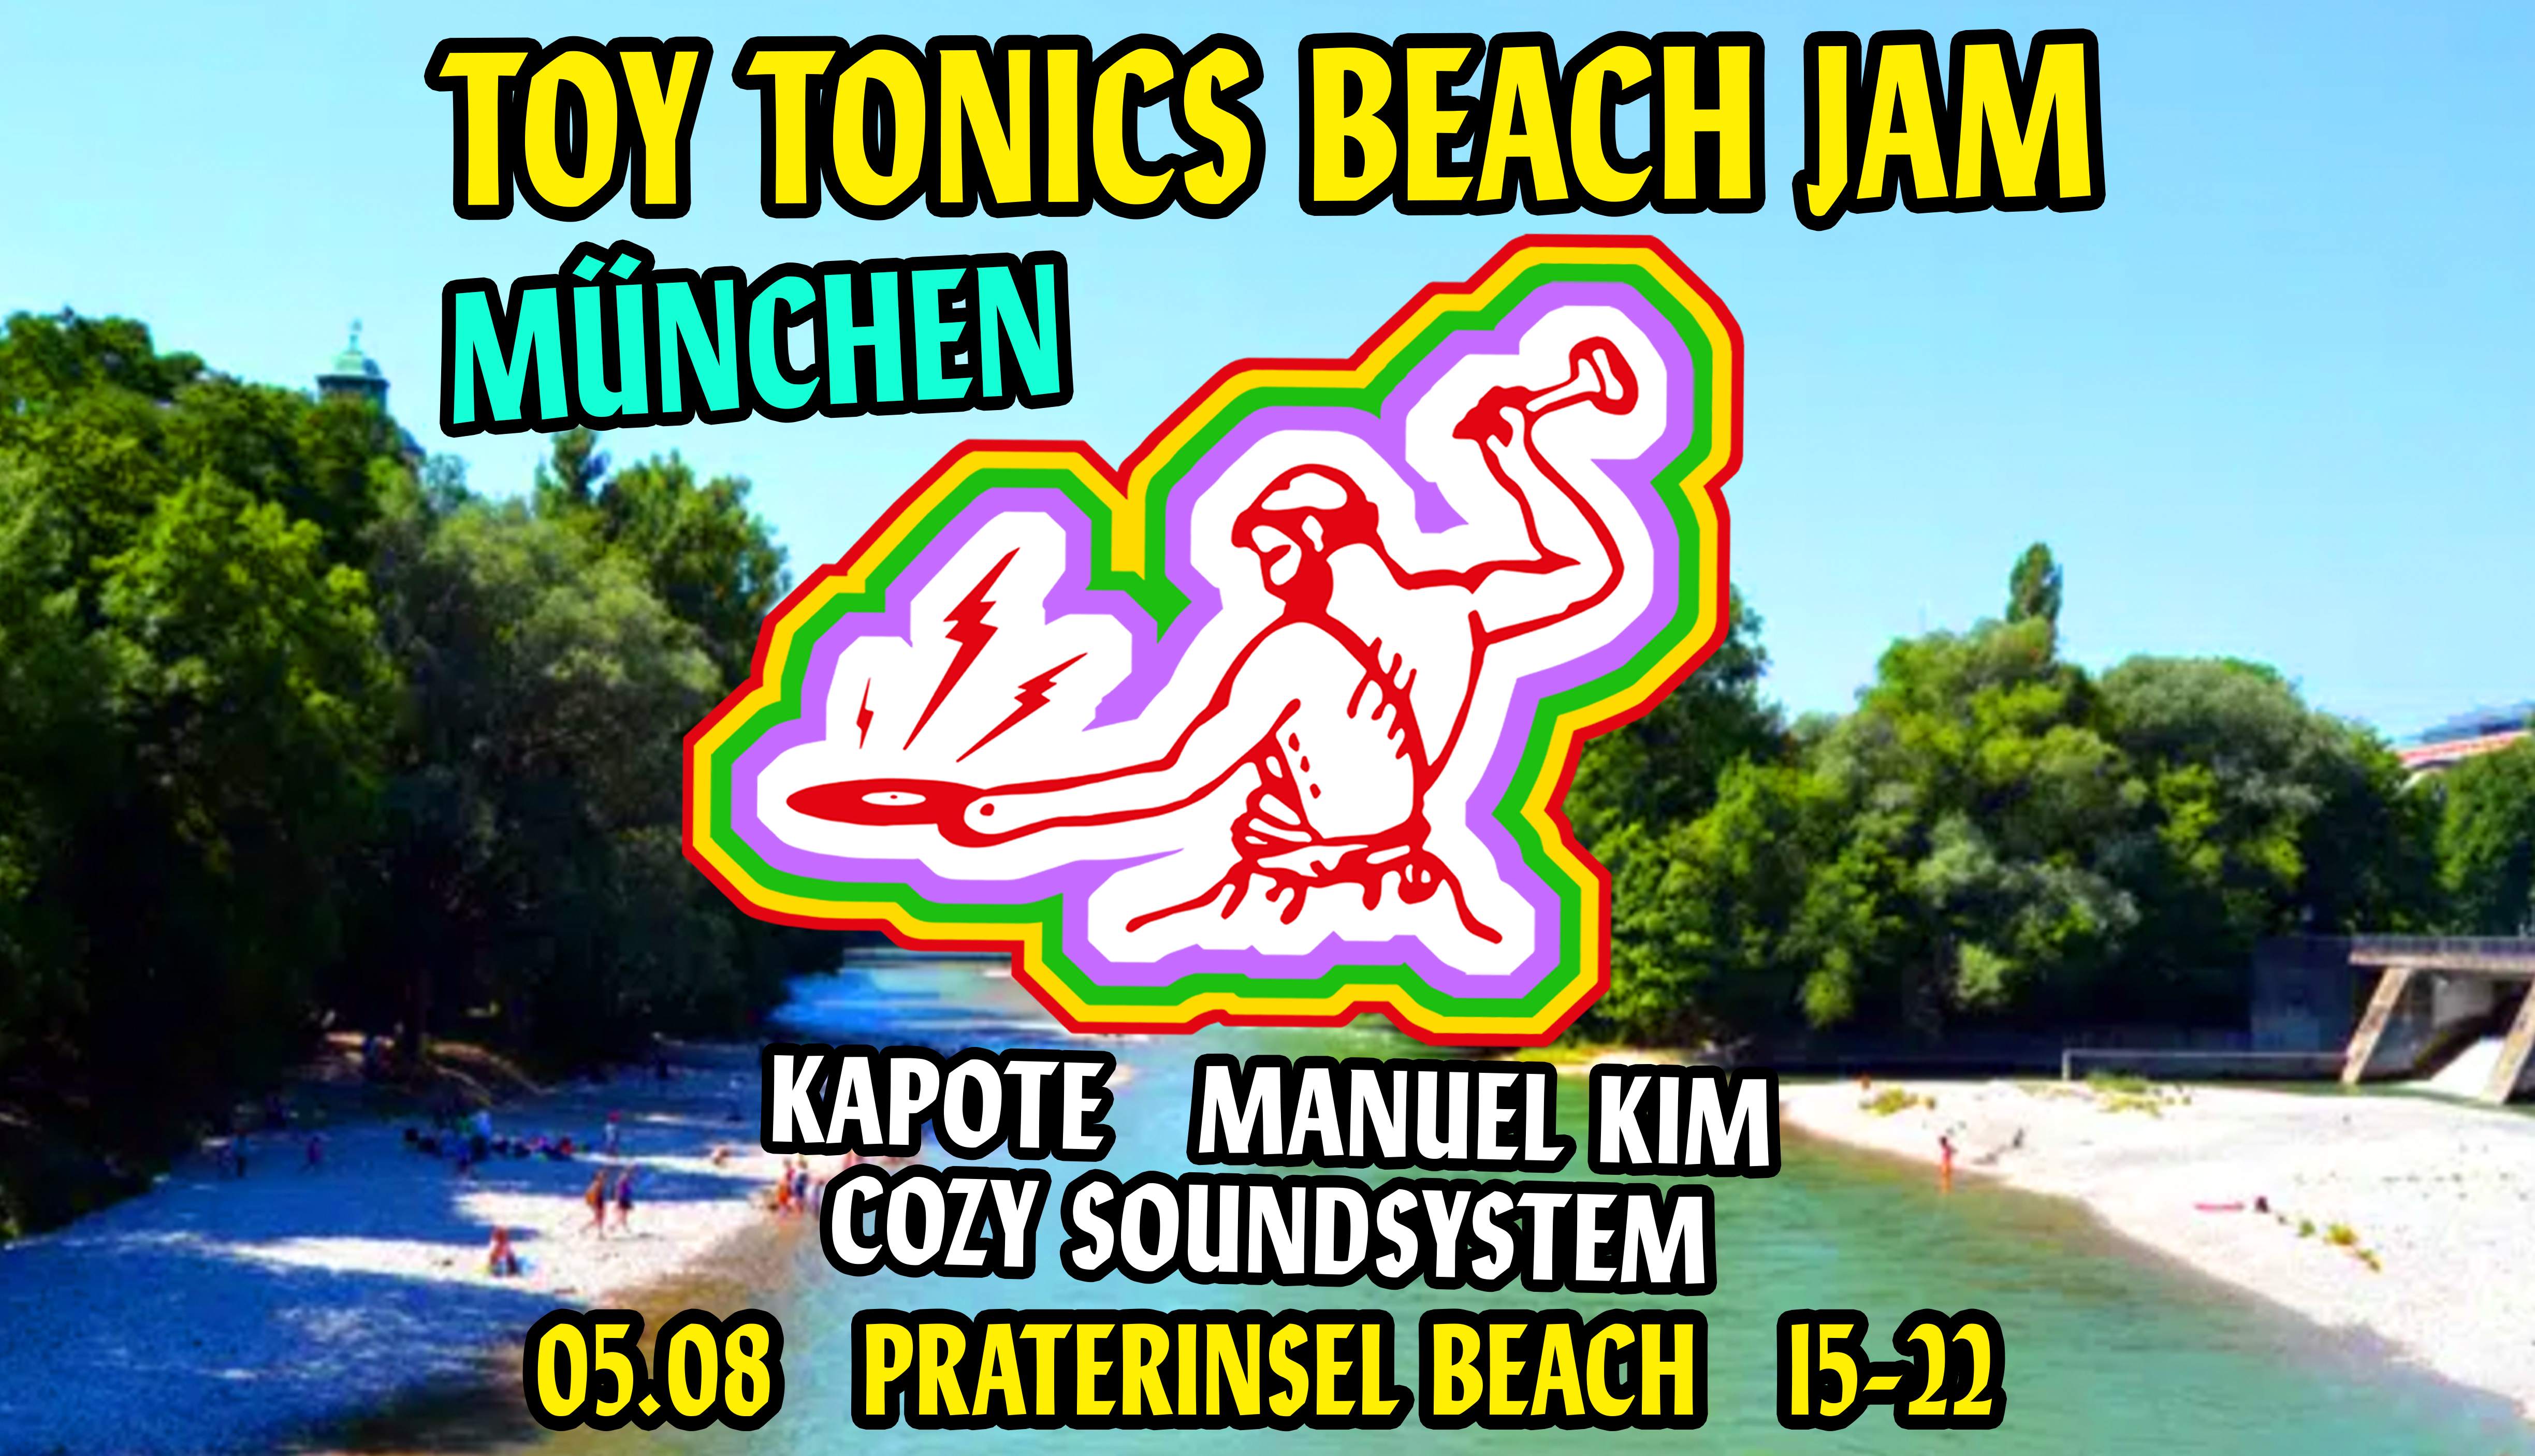 [CANCELLED] Toy Tonics Beach Jam - フライヤー表